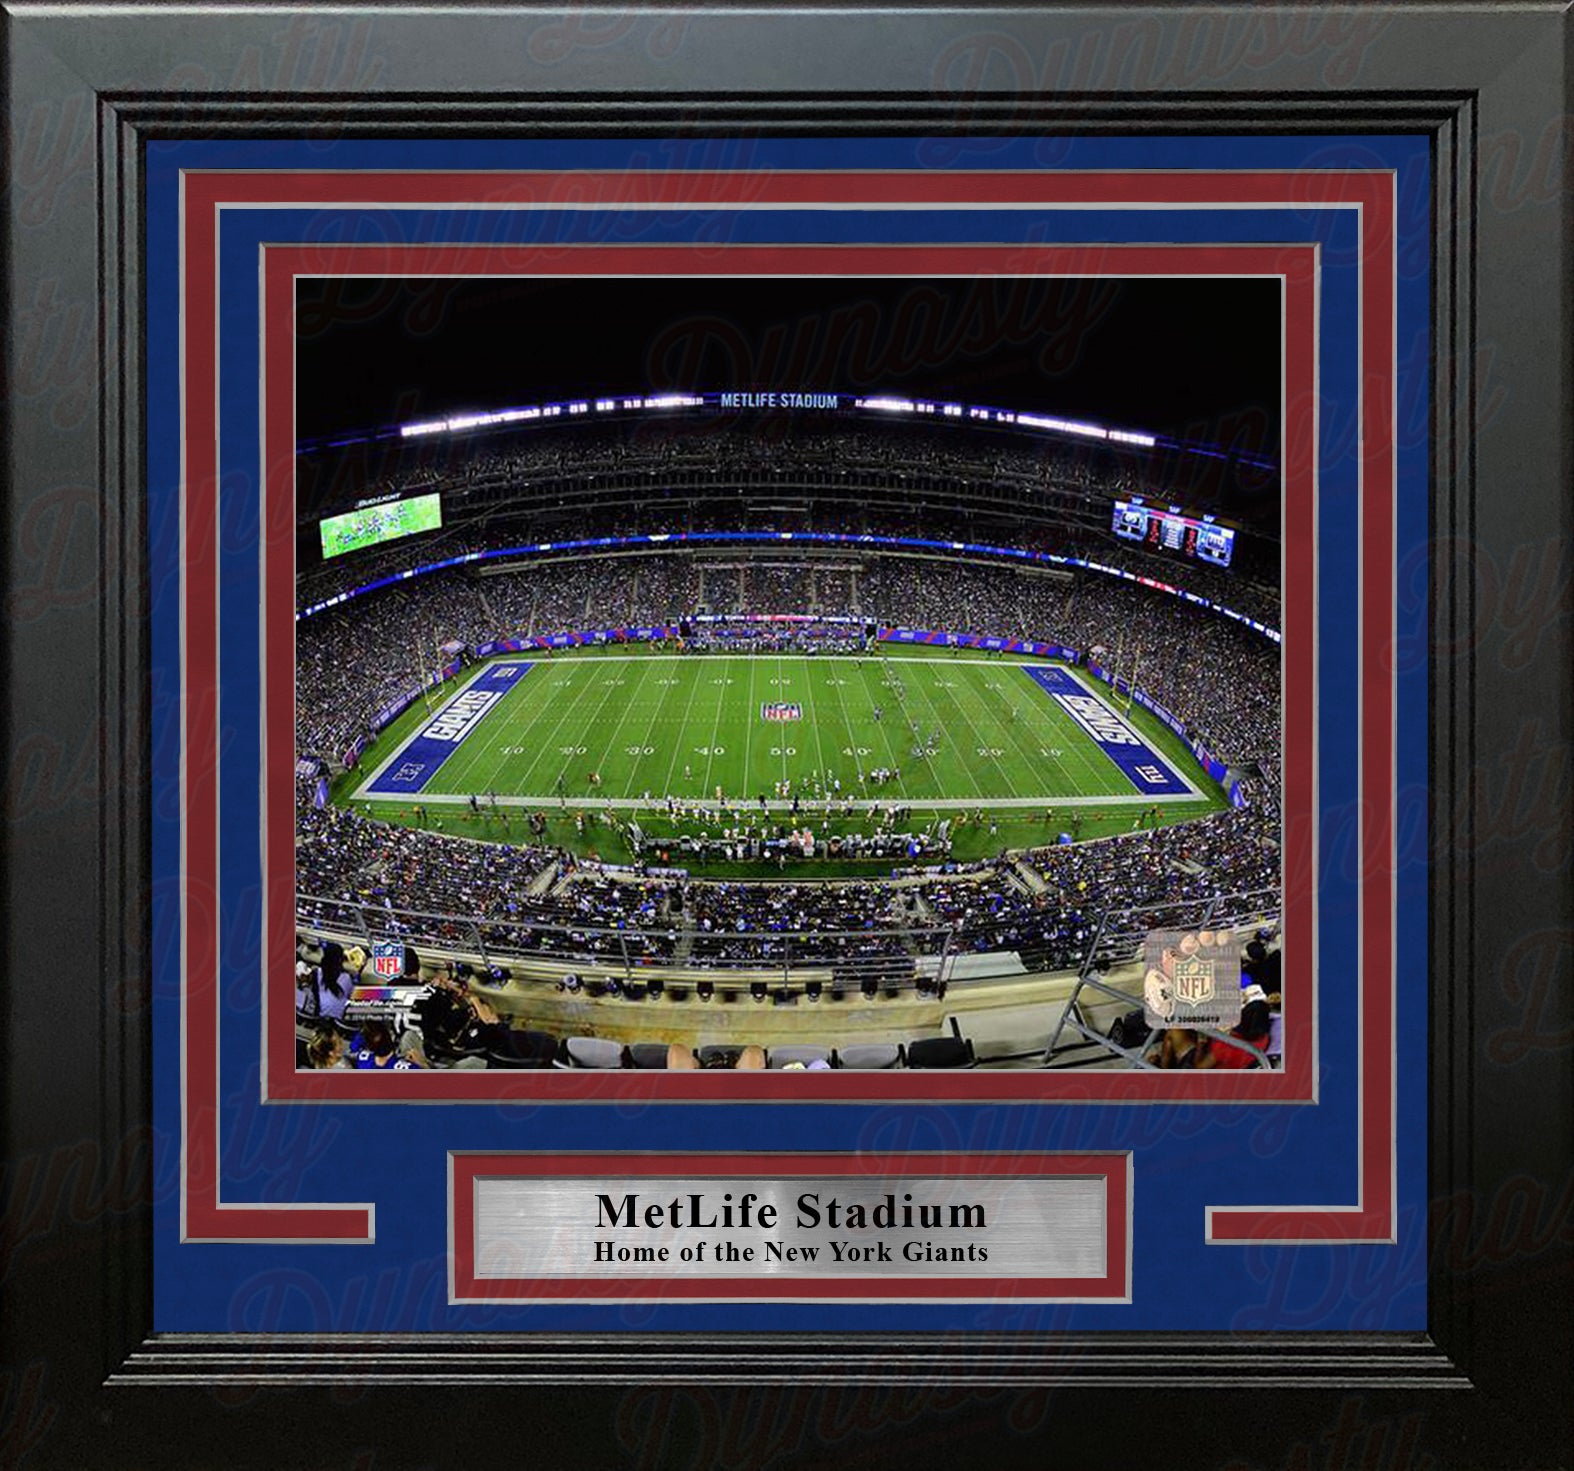 New York Giants MetLife Stadium at Night 8 x 10 Framed Football Photo -  Dynasty Sports & Framing